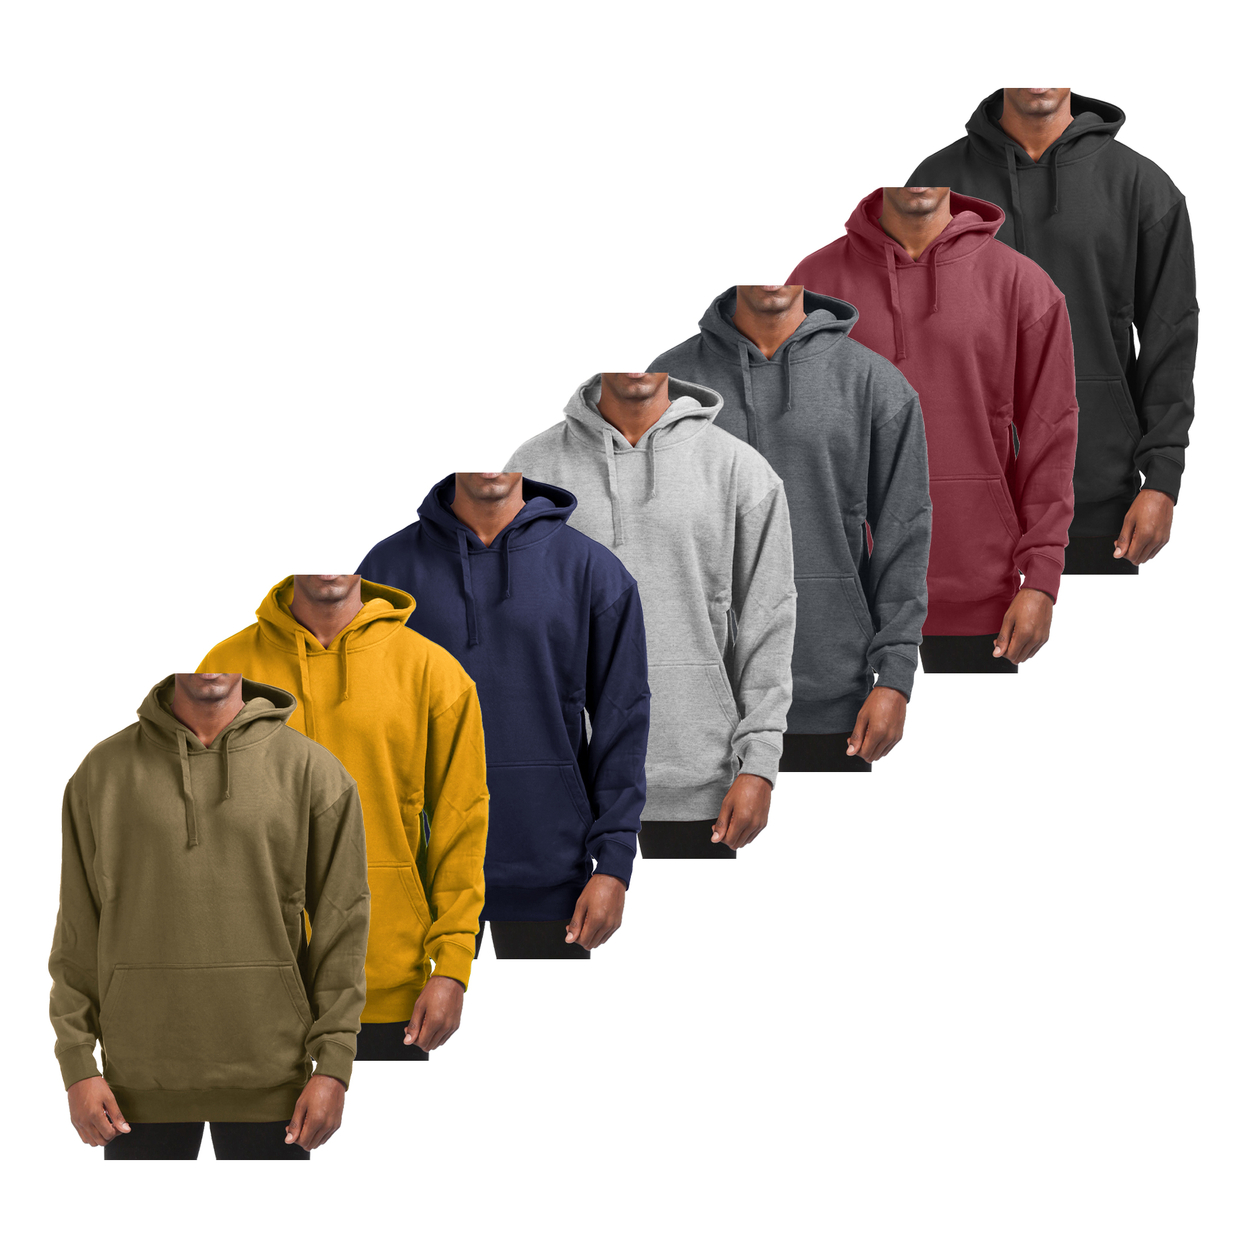 2-Pack: Men's Super-Soft Winter Warm Cotton-Blend Fleece Pullover Hoodie With Kangaroo Pocket - Black & Charcoal, Large